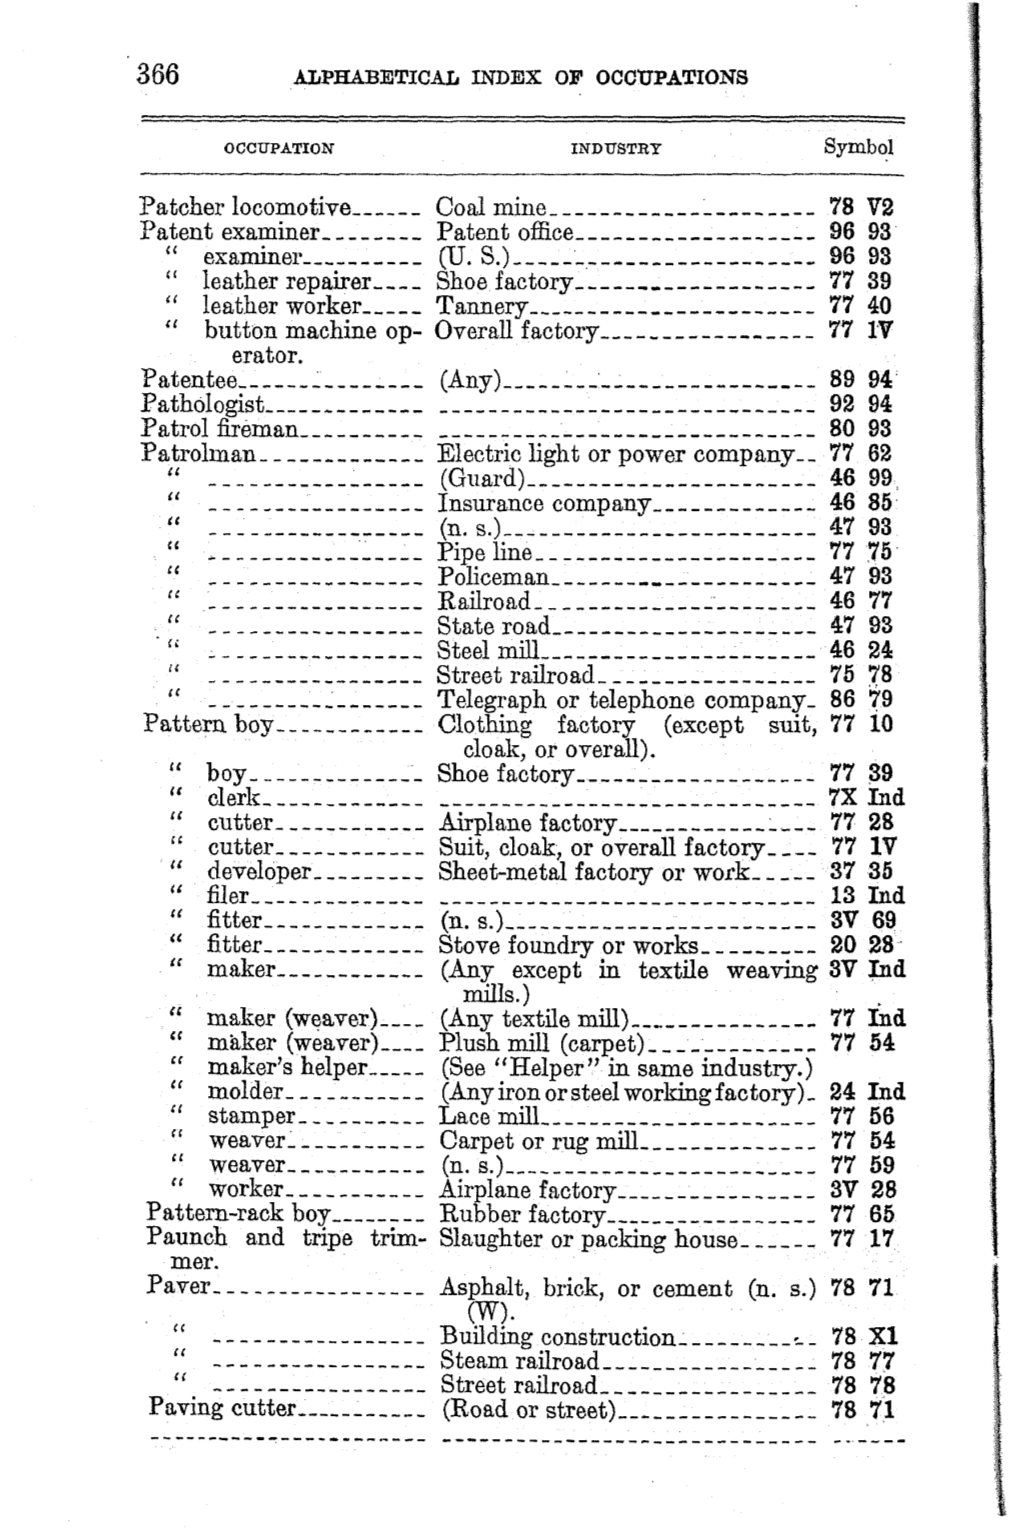 1930 Census: Alphabetical Index of Occupations